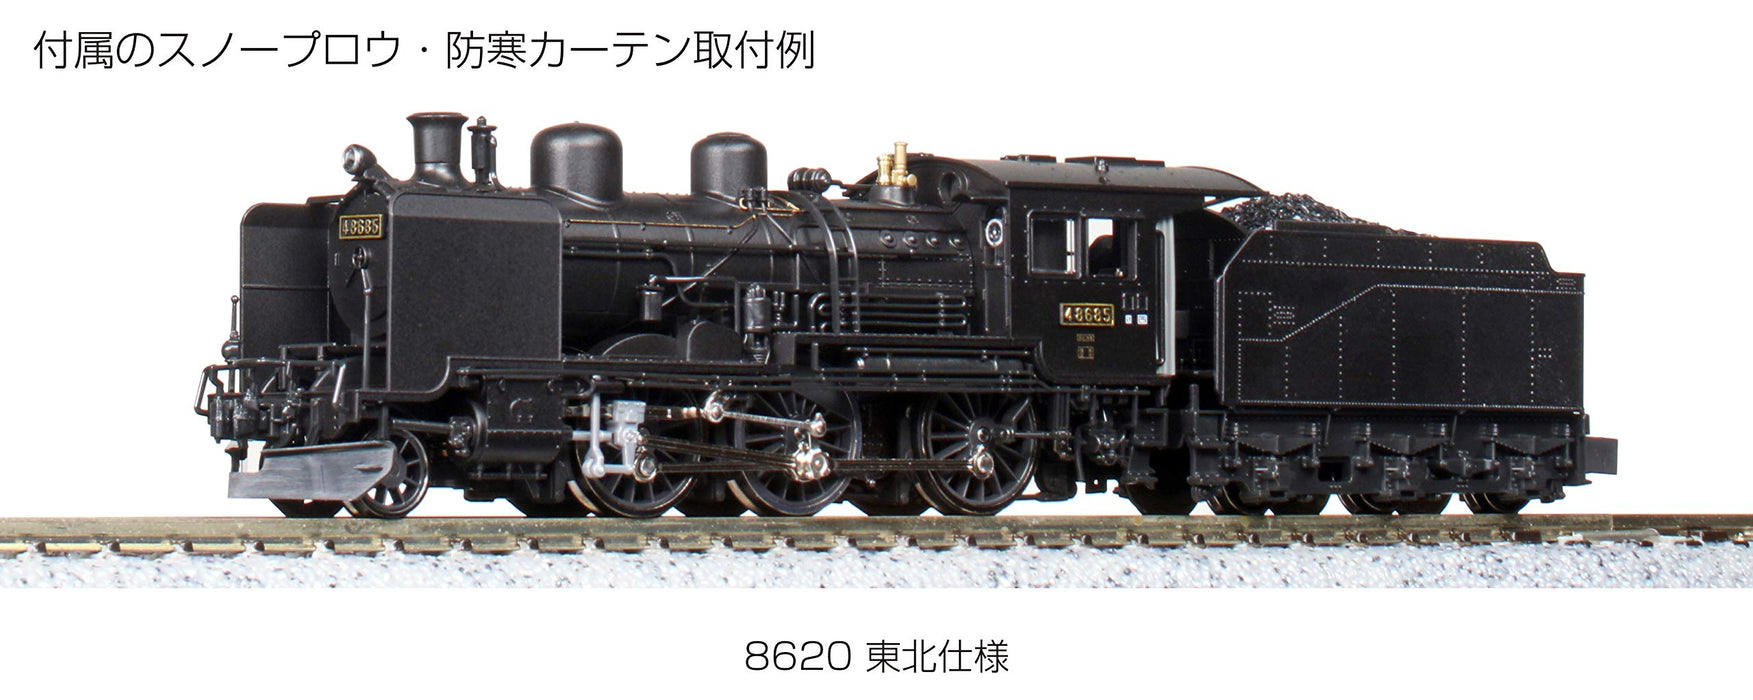 Kato N Gauge 2028-1 Tohoku Steam Locomotive Railway Model